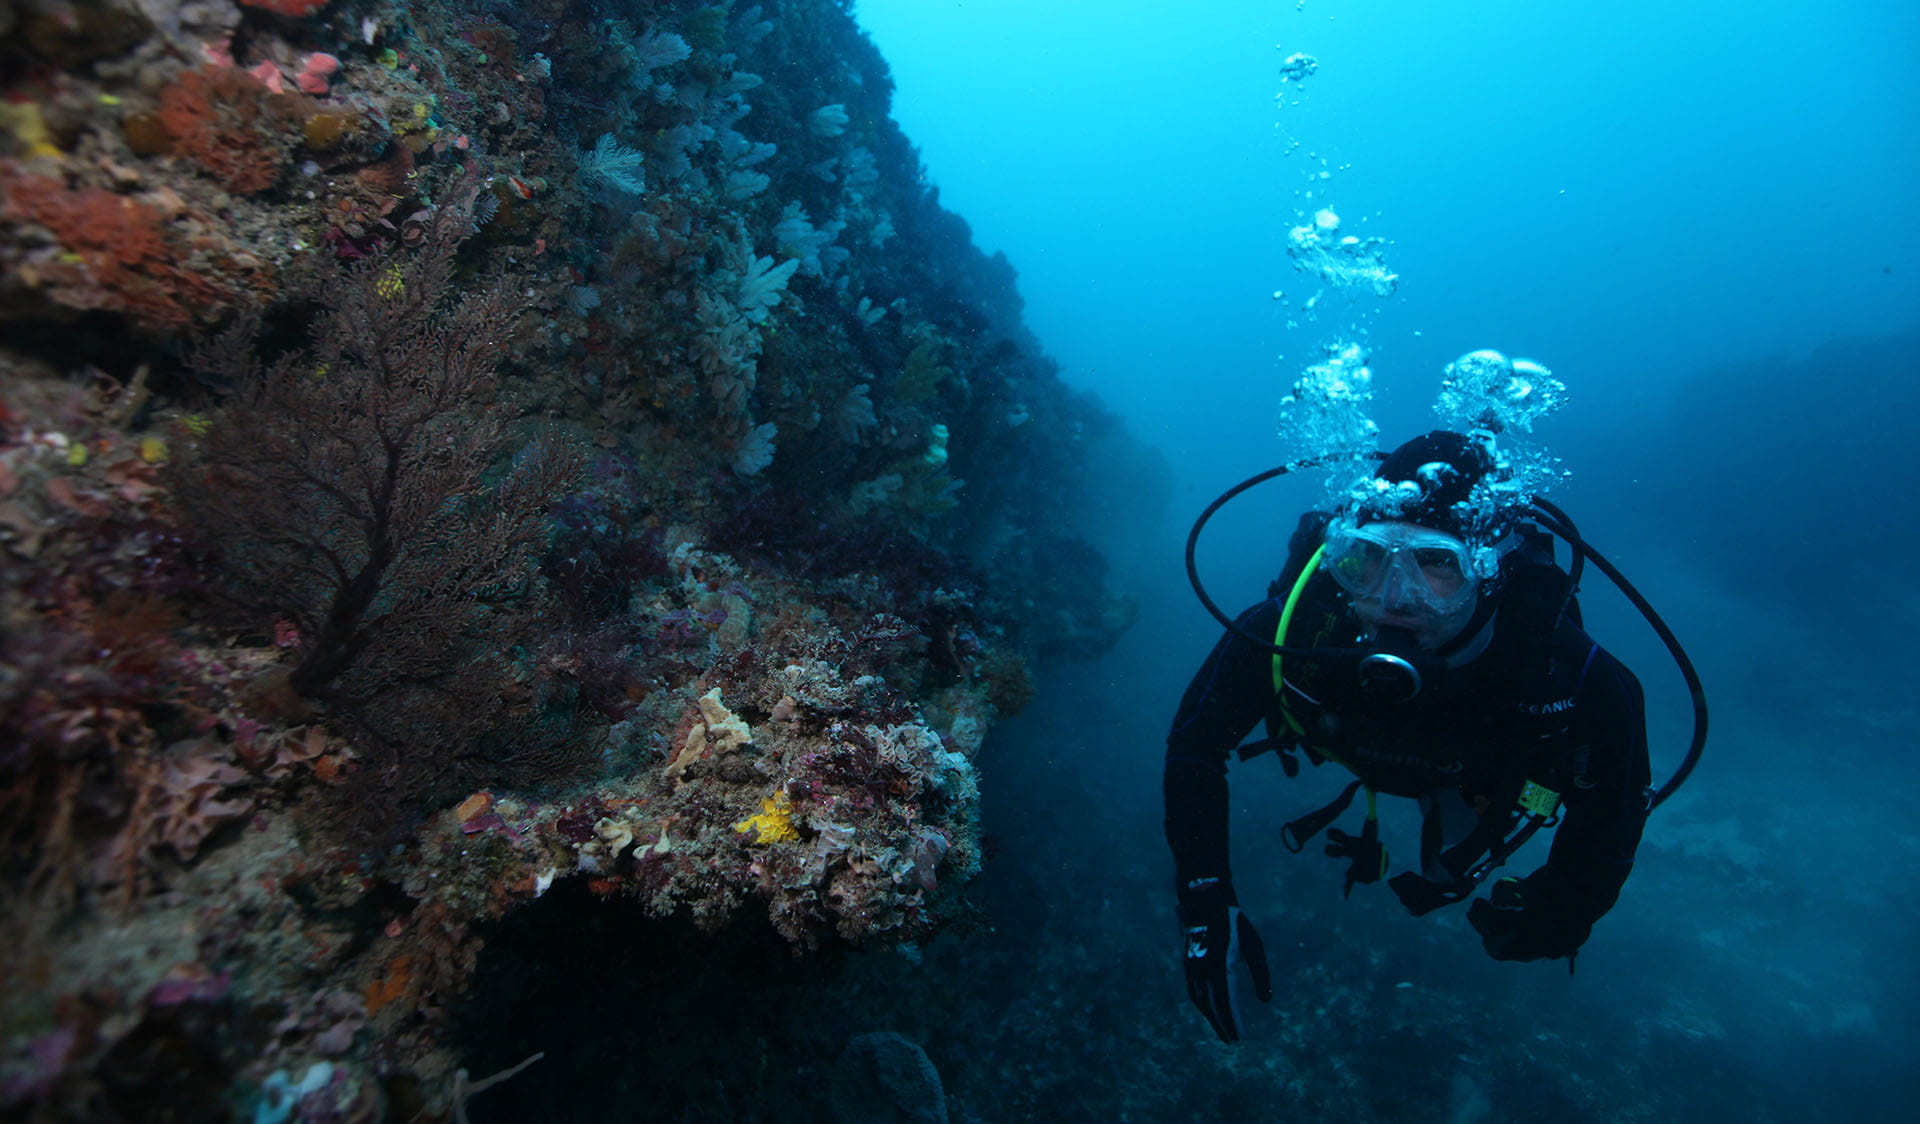 Underwater diver and coral at Twelve Apostles Marine National Park